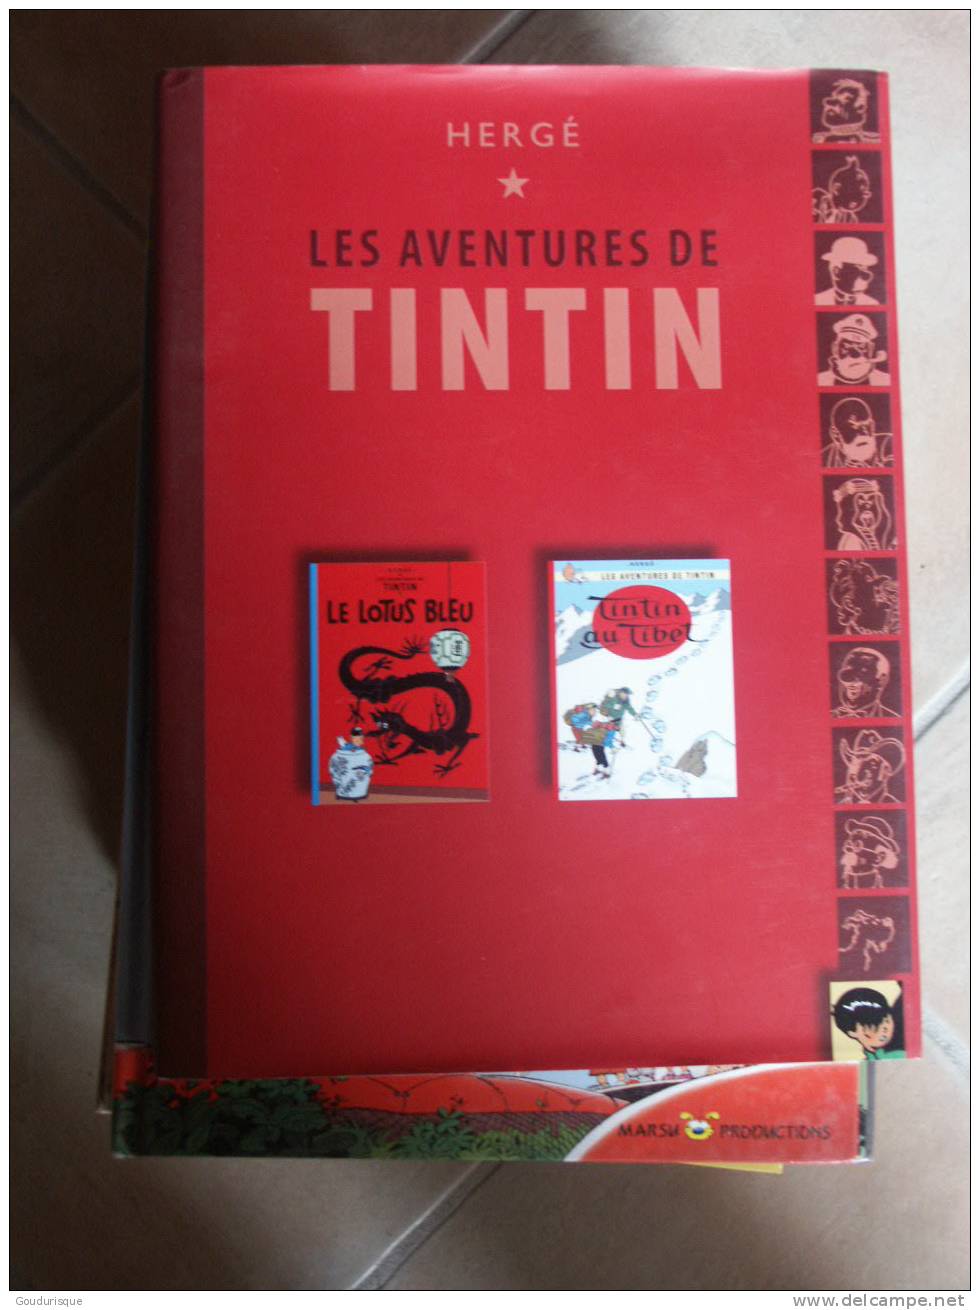 TINTIN ALBUM DOUBLE LE LOTUS BLEU/TINTIN AU TIBET AVEC JAQUETTE EDITION DE LUXE  HERGE - Tintin